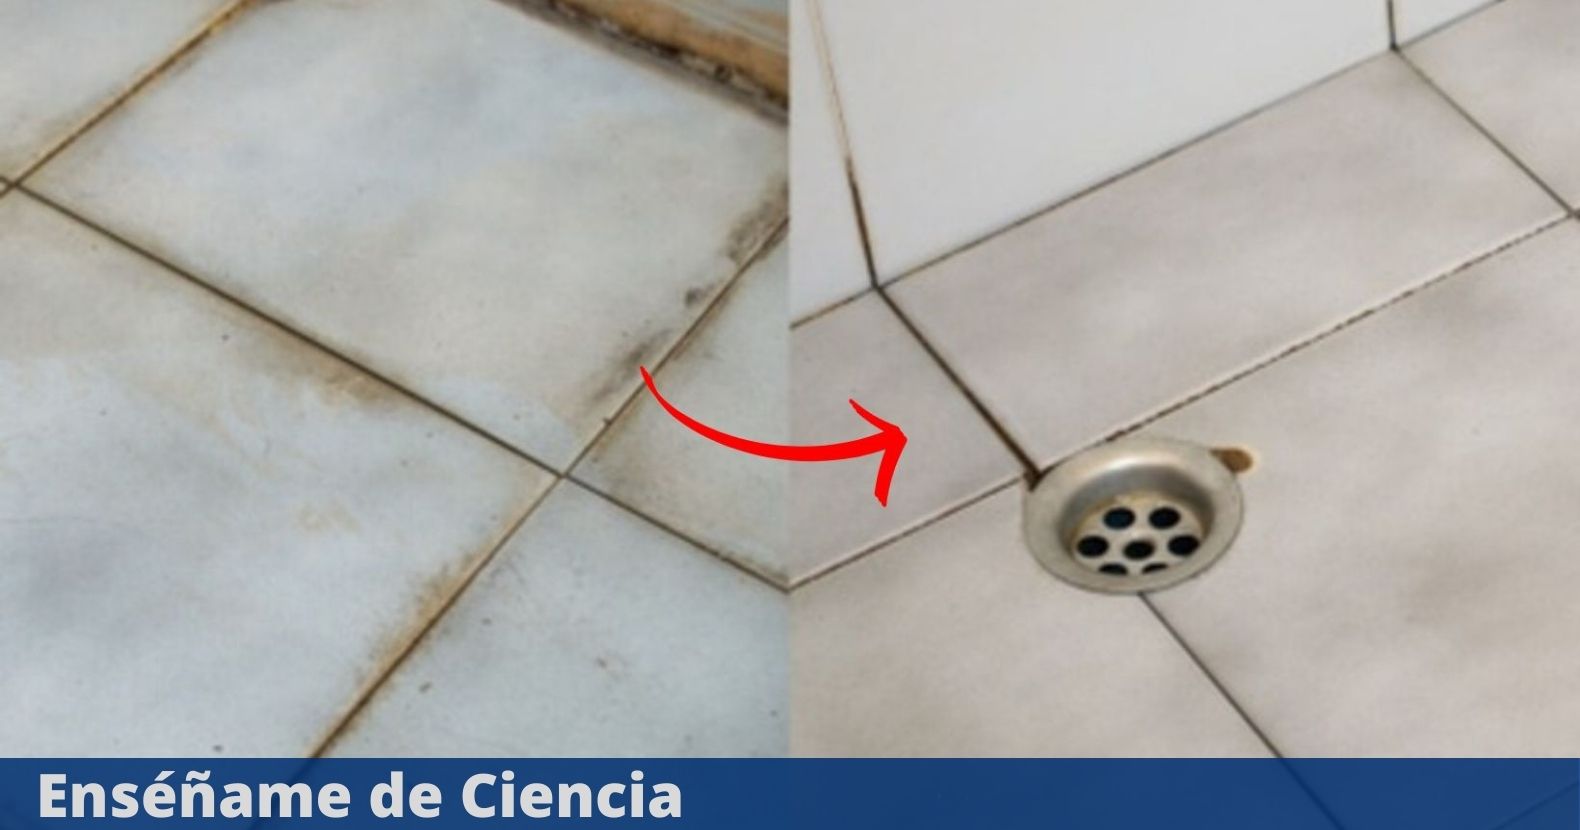 The perfect homemade ingredient to clean bathroom floor stains – Enséñame de Ciencia